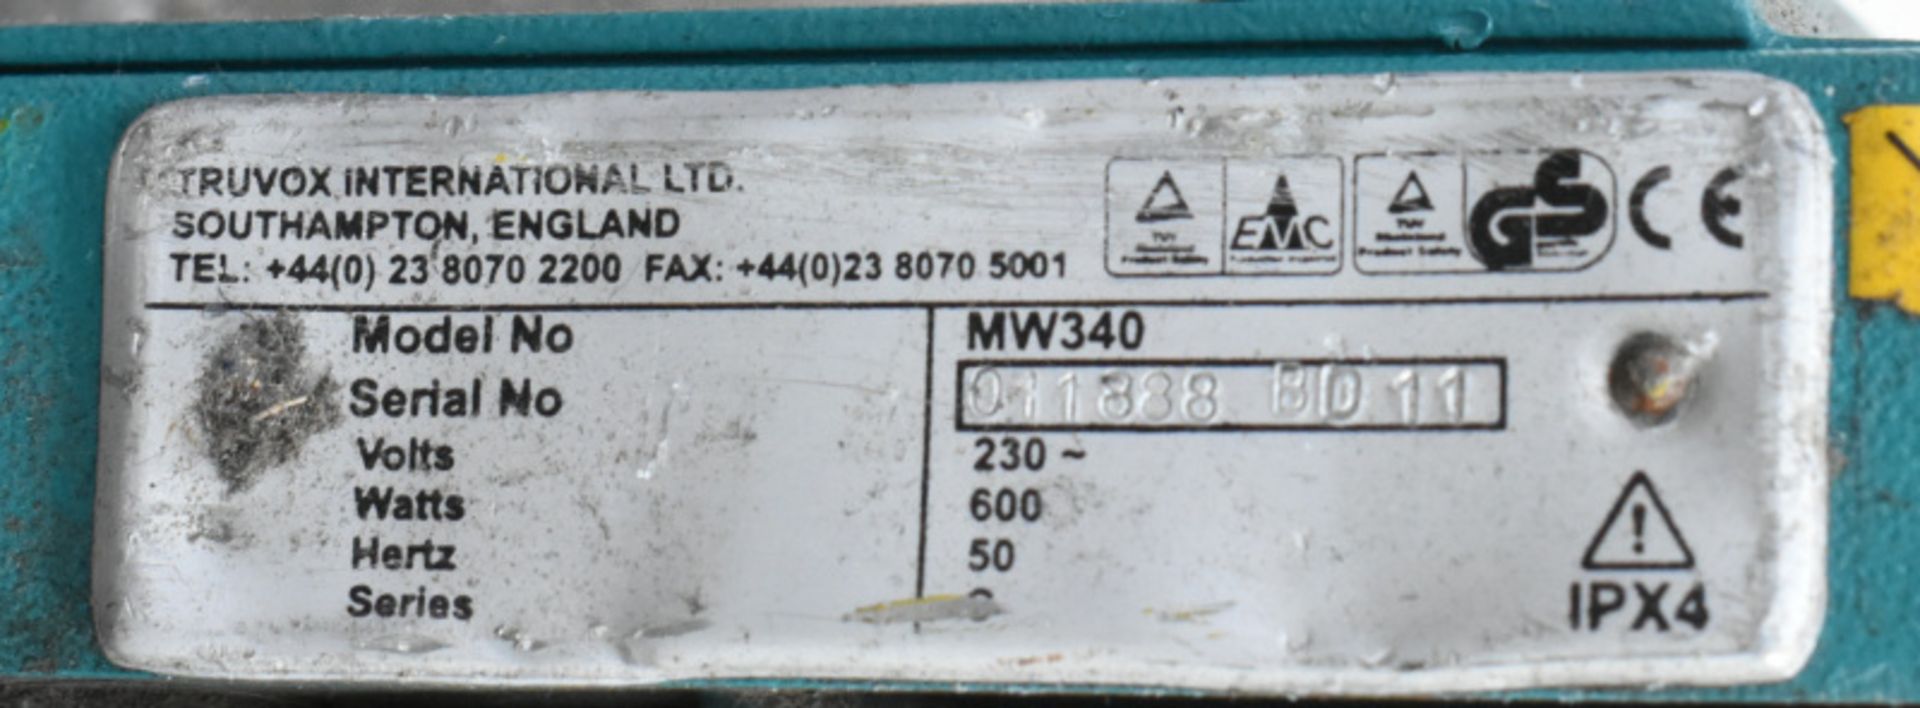 2 x Truvox Multiwash Floor Scrubber Dryer, Model- MW340 - Image 5 of 6